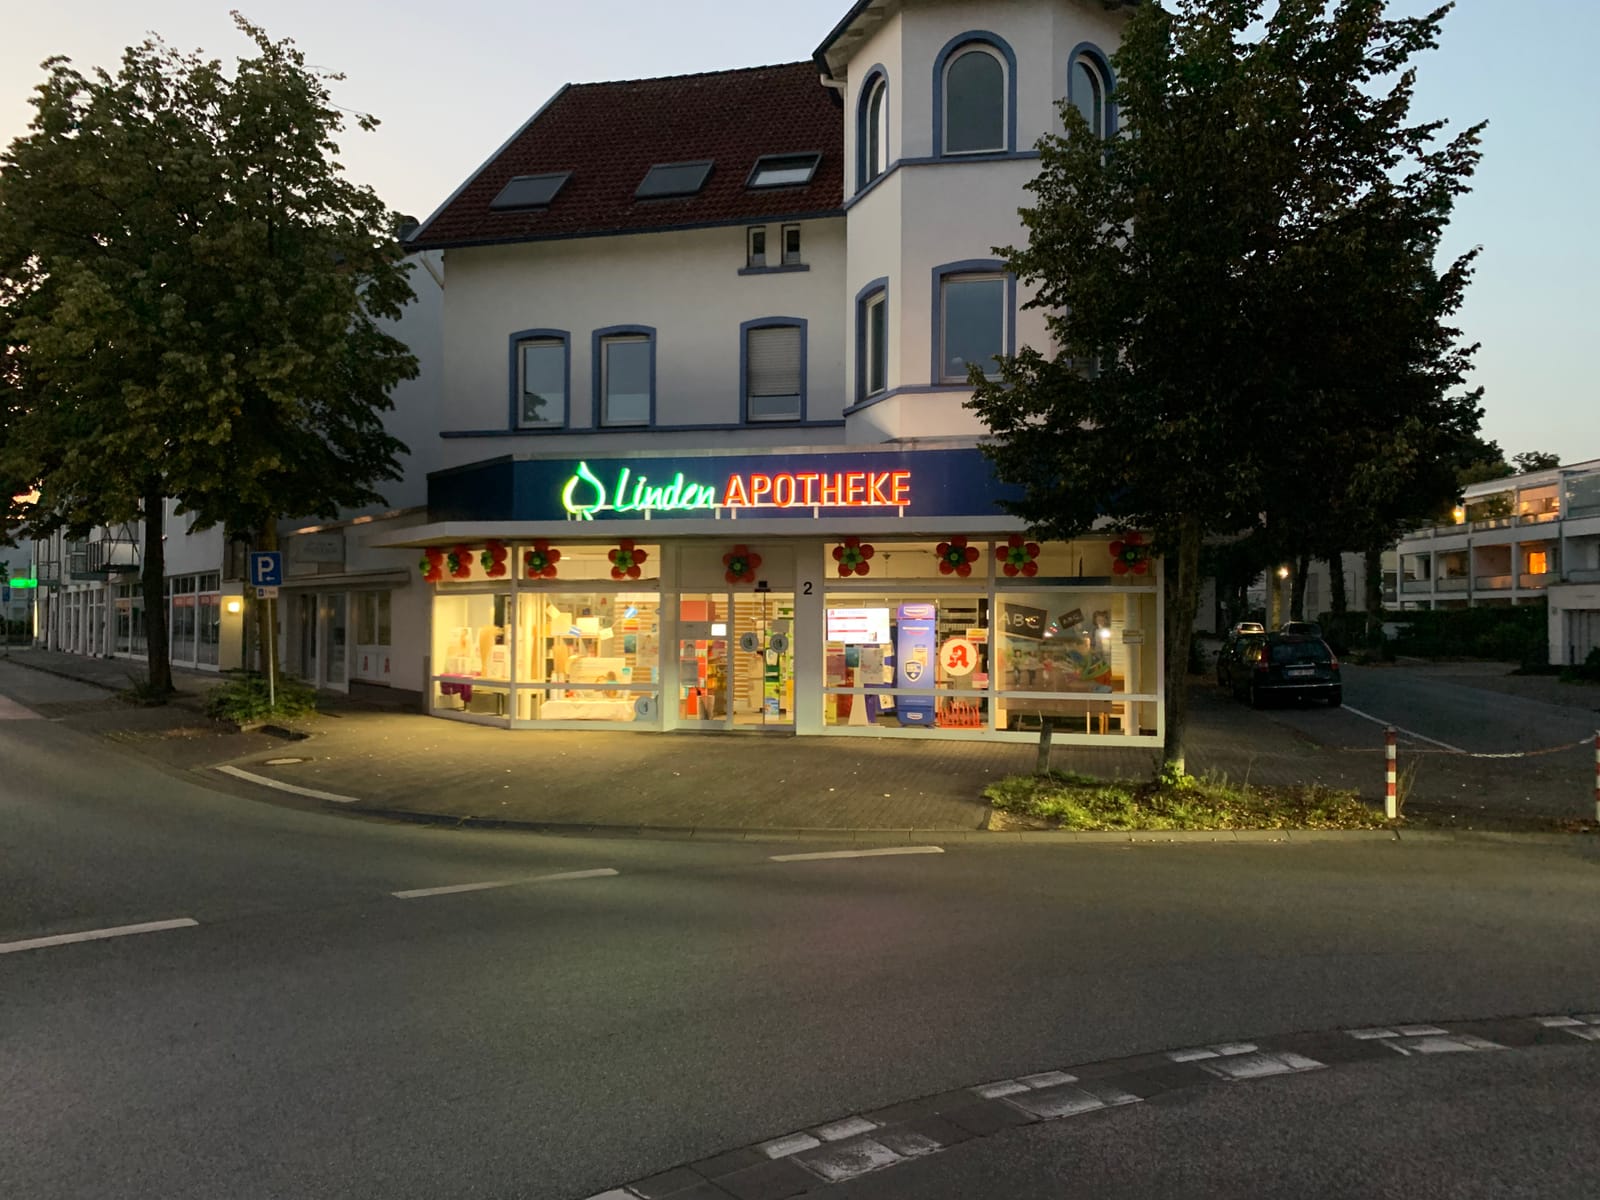 Linden Apotheke, Marienfelder Straße 2 in Gütersloh